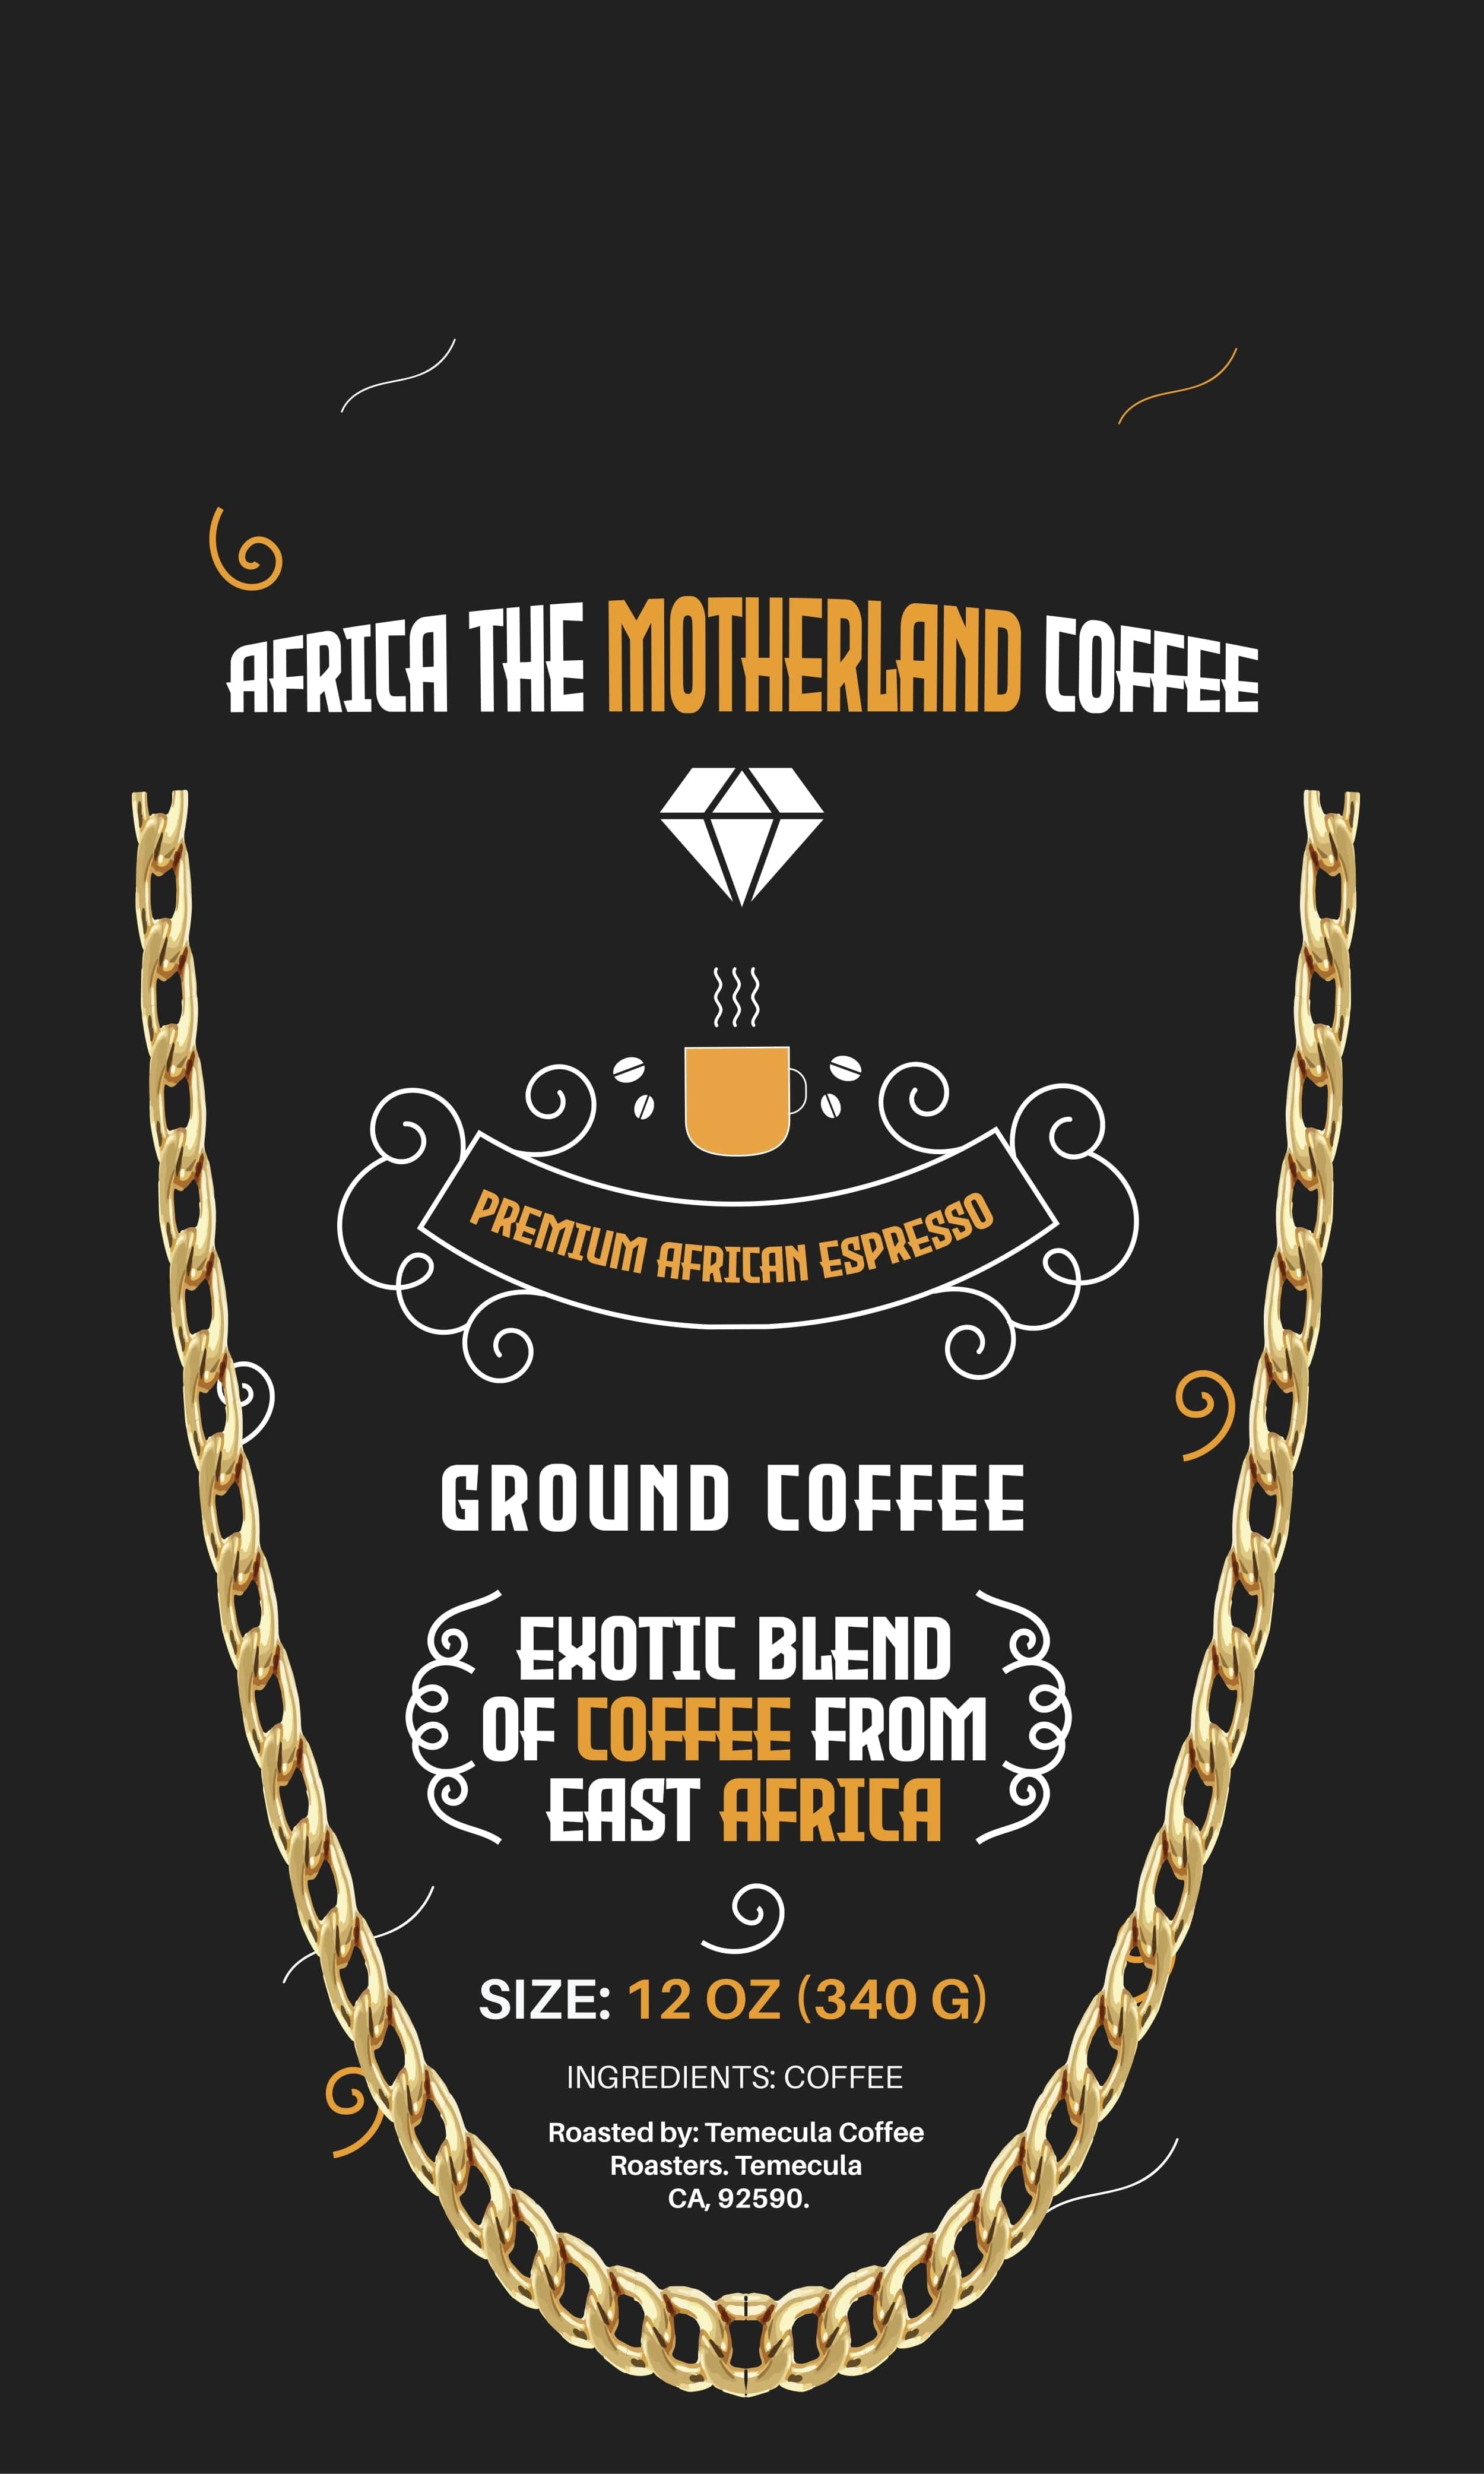 VVS Jewelry hip hop jewelry Ground / 12oz Africa the Motherland Coffee